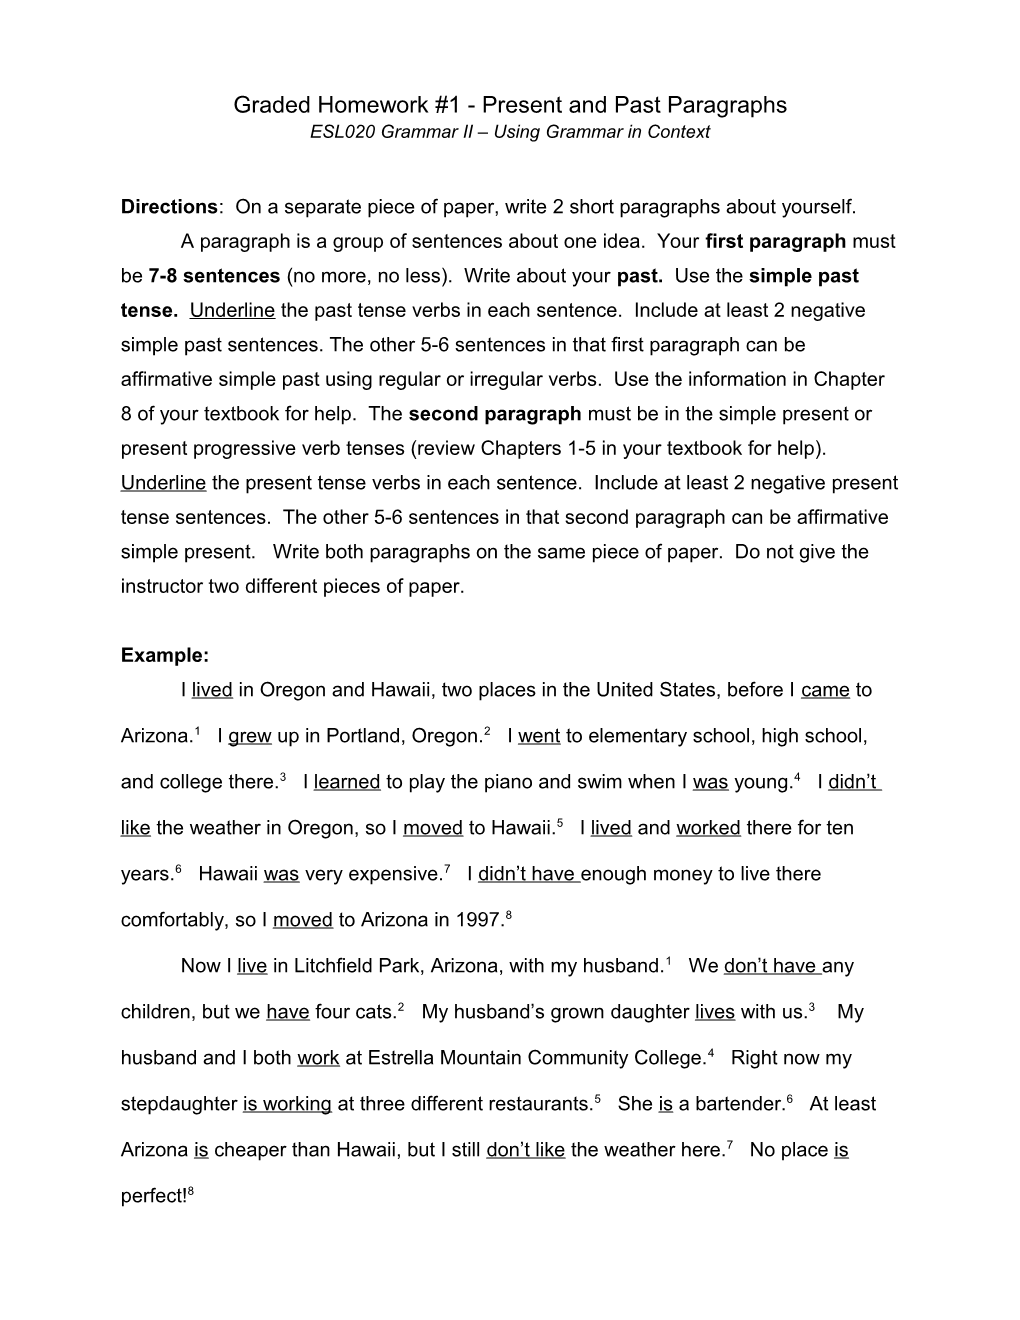 Graded Homework #1 - Present and Past Paragraphs ESL020 Grammar II Using Grammar in Context